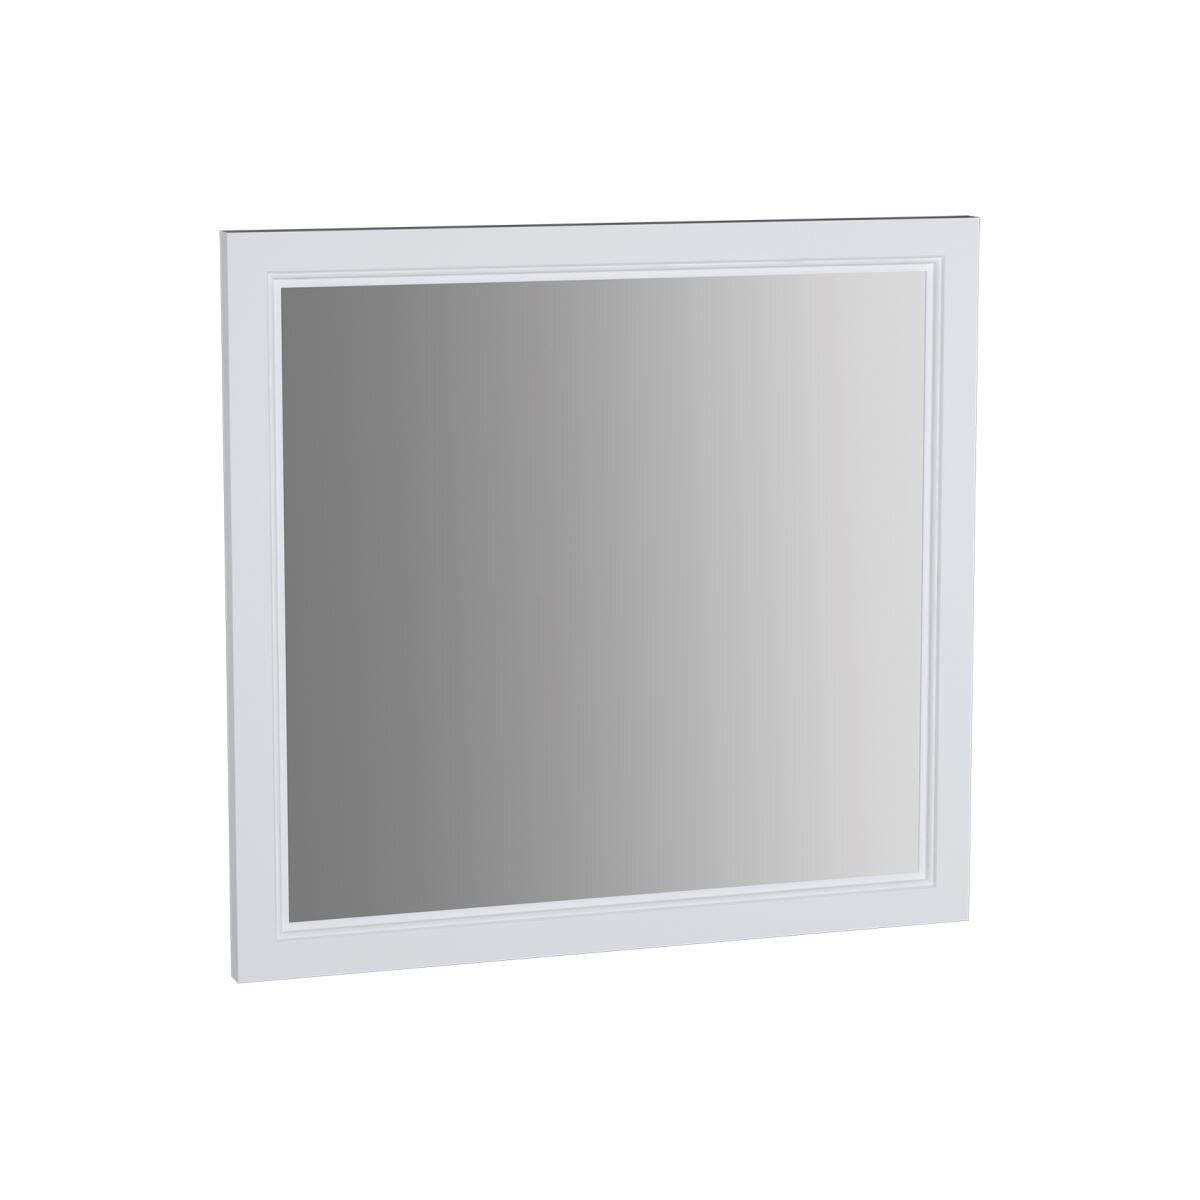 62216 - Vitra Valarte Düz Ayna, 80 cm, Mat Beyaz